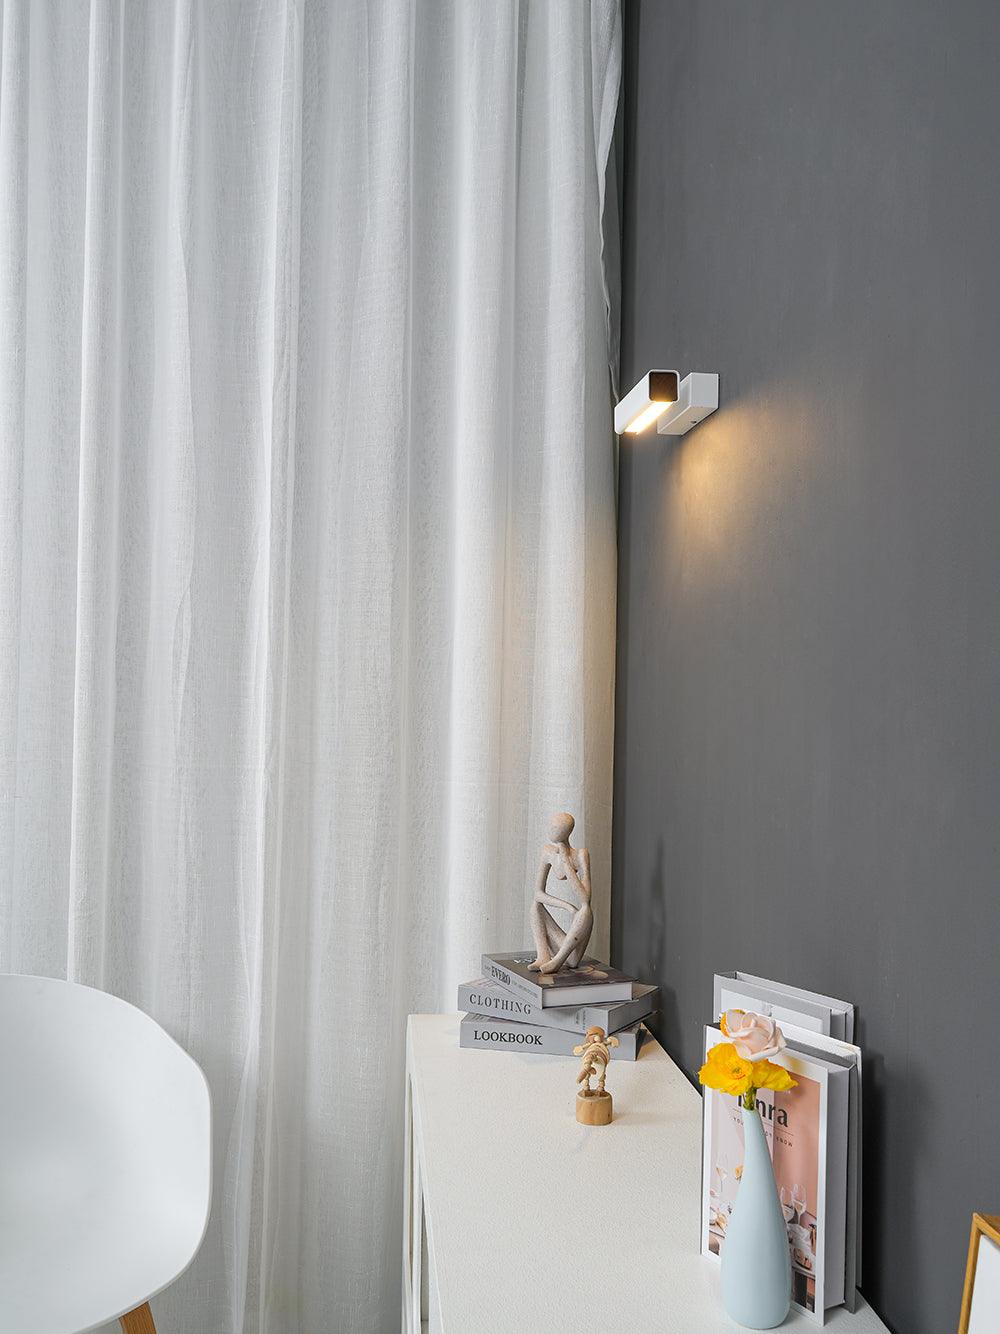 Nordic Art Bedroom Wall Lamp - Docos